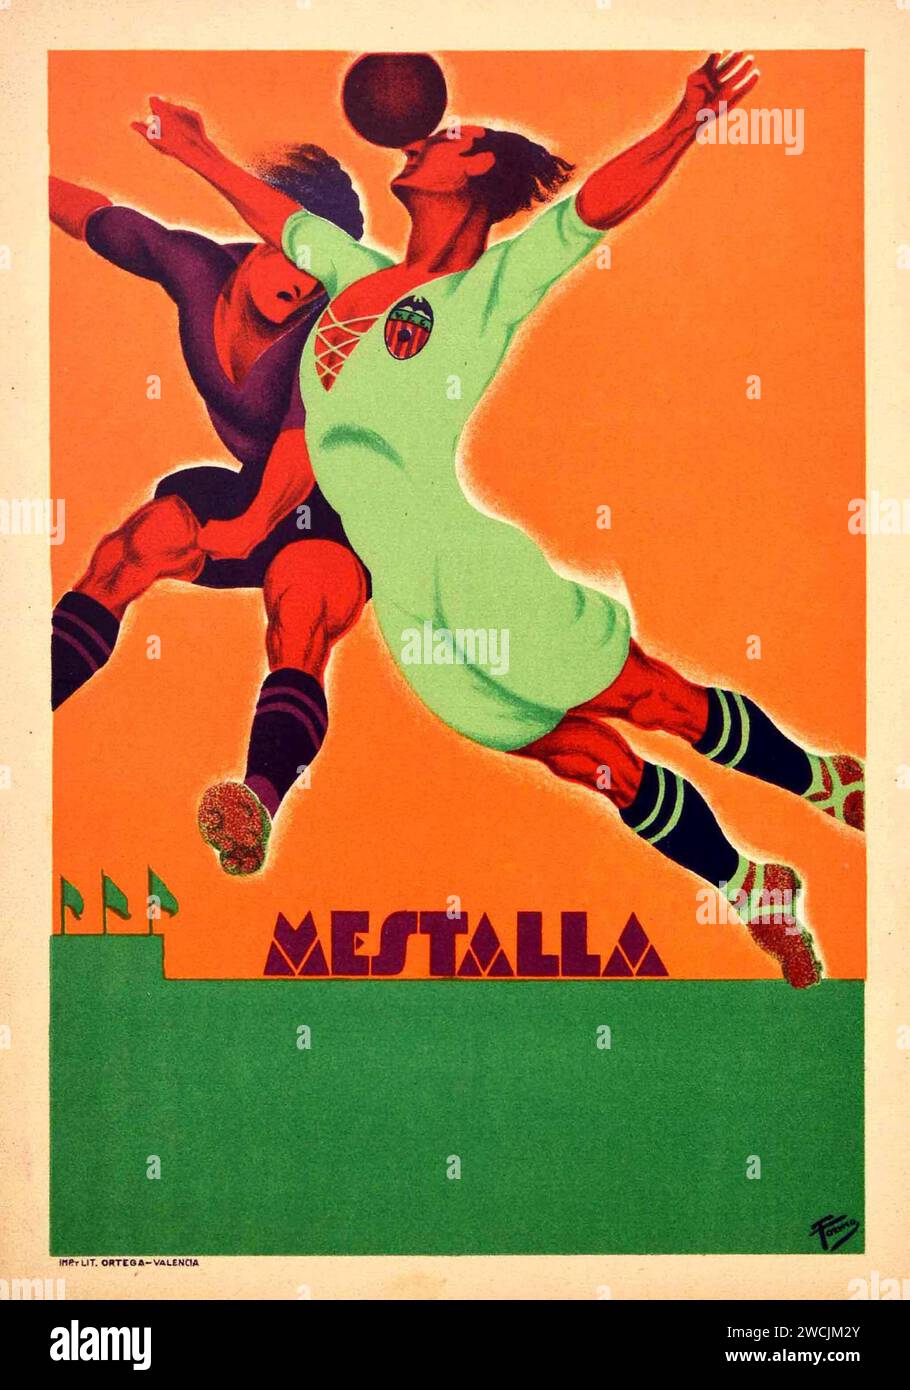 'Mestalla' Spanish Art Deco style - Football - Sport poster - Vintage print, 1932 Stock Photo